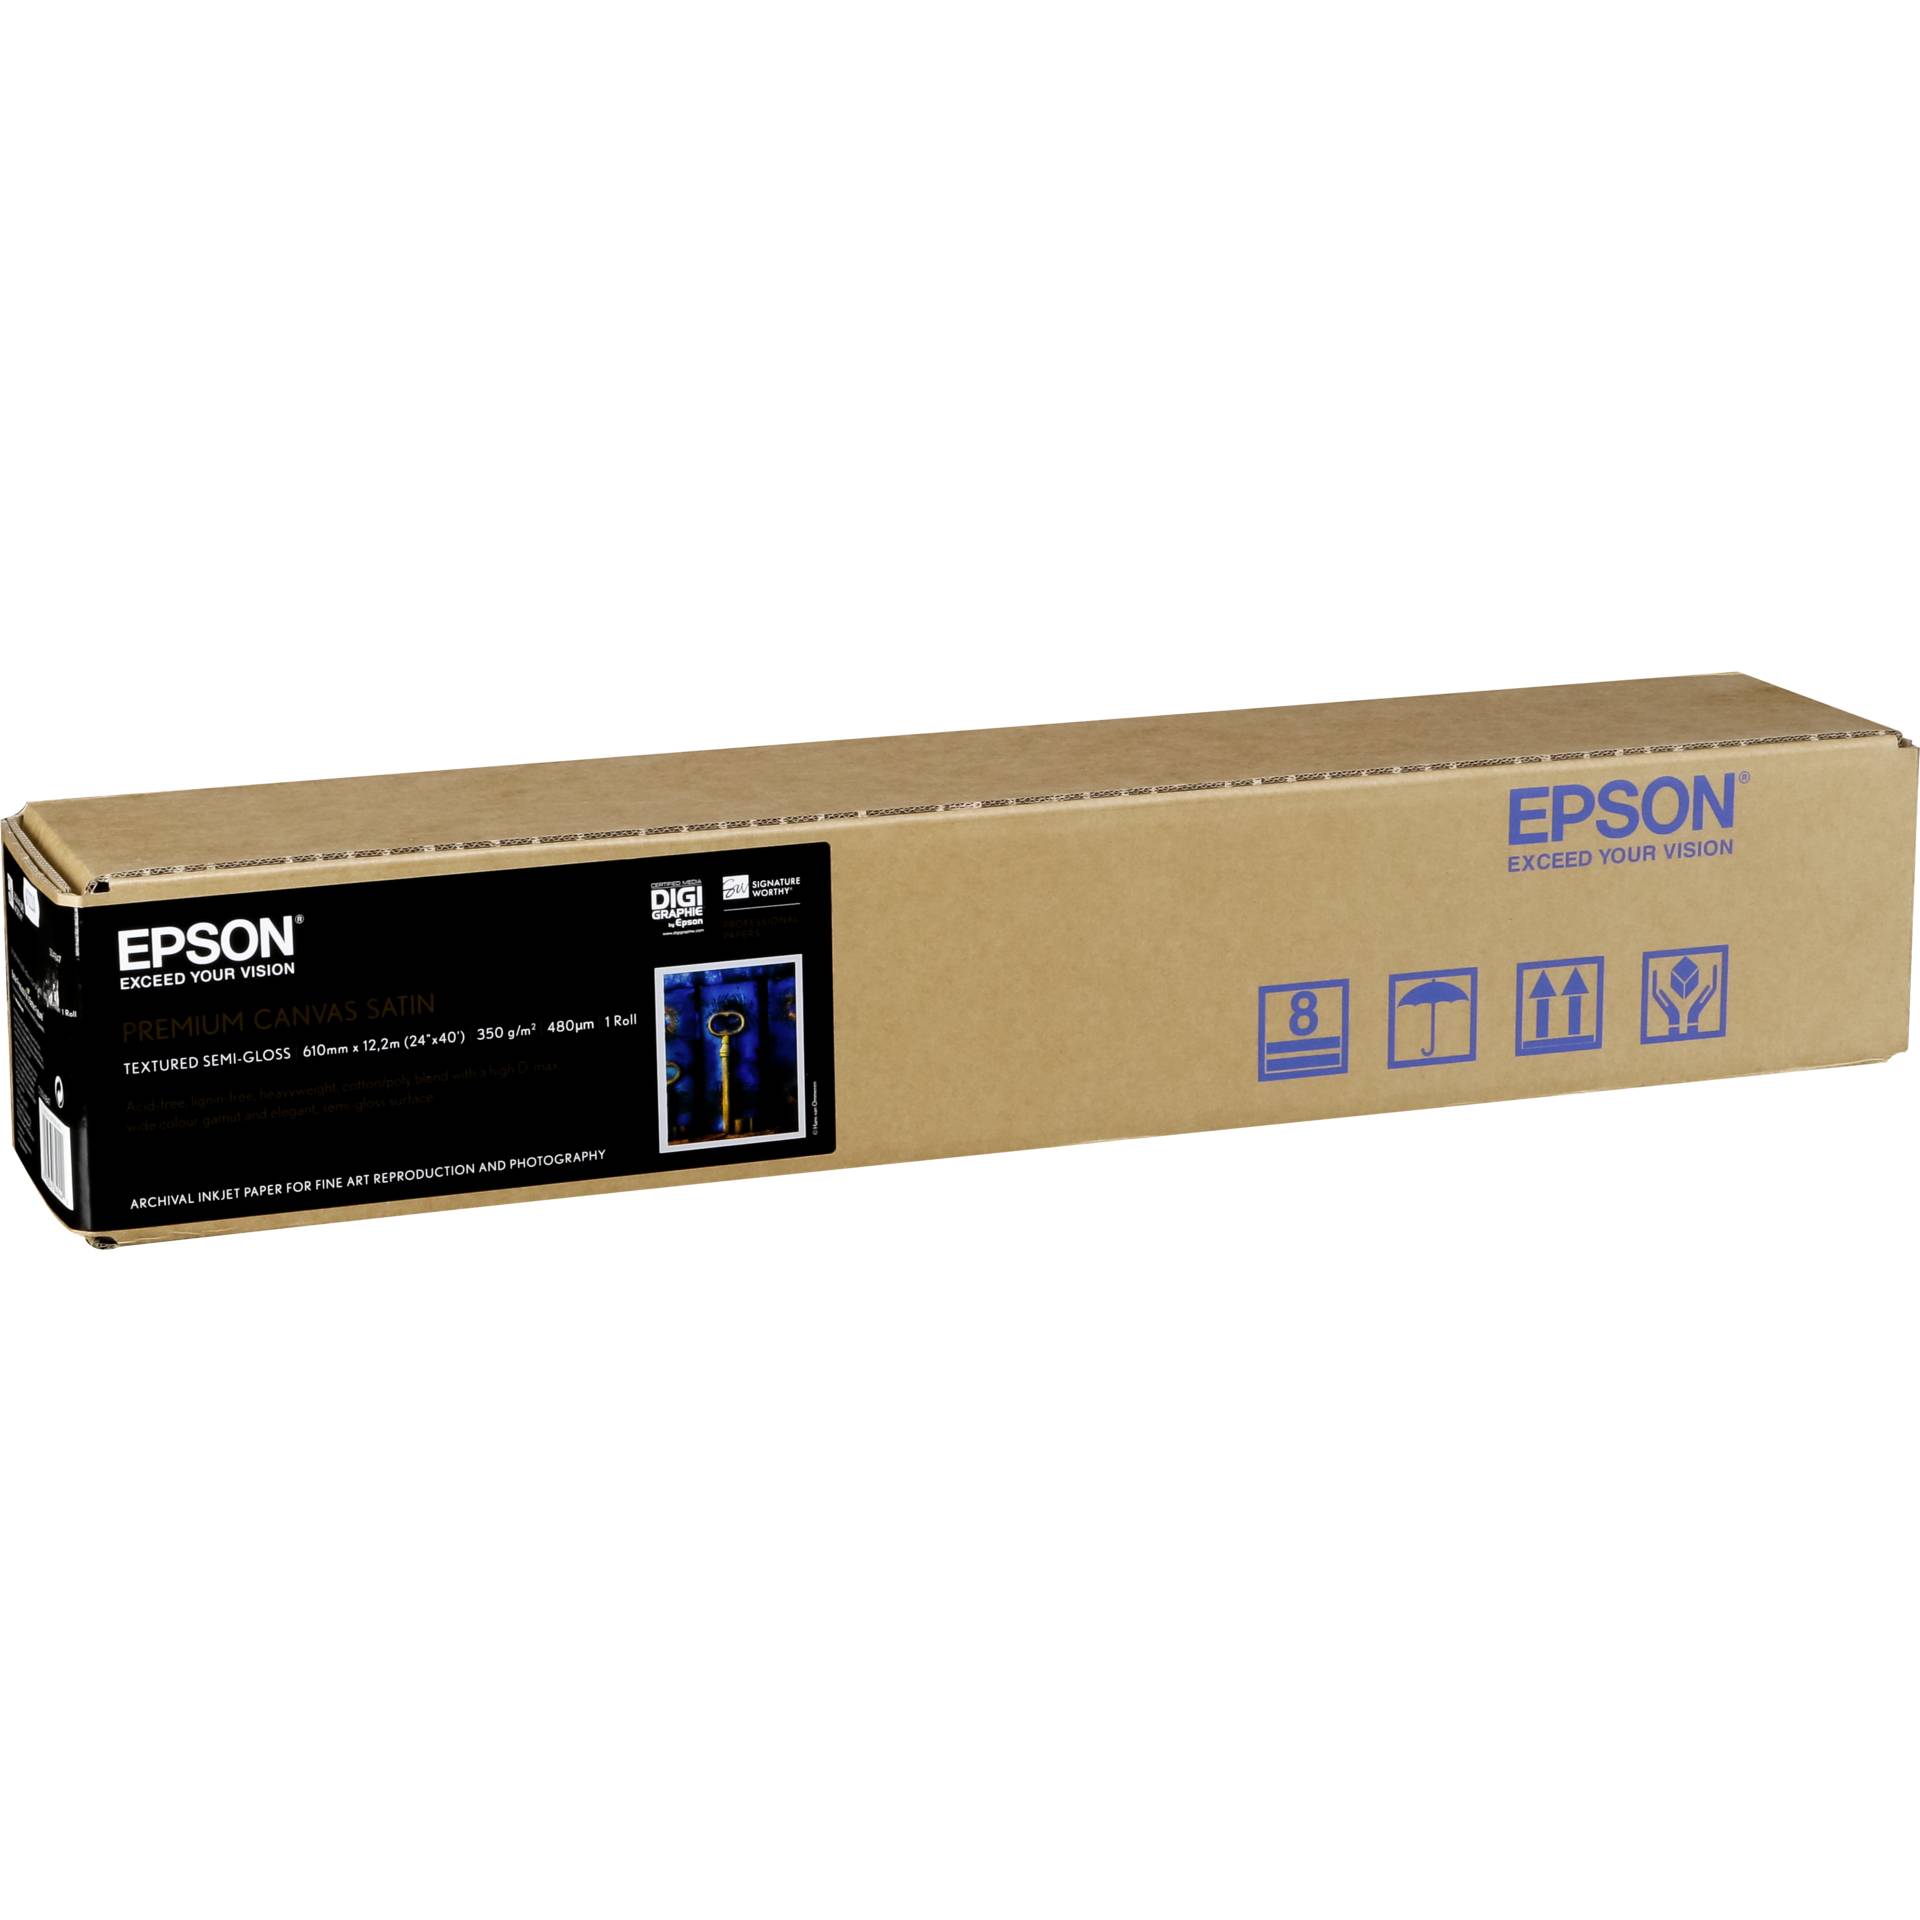 Epson Premium Canvas Satin 350 g 61 cm x 12,2 m          S 0